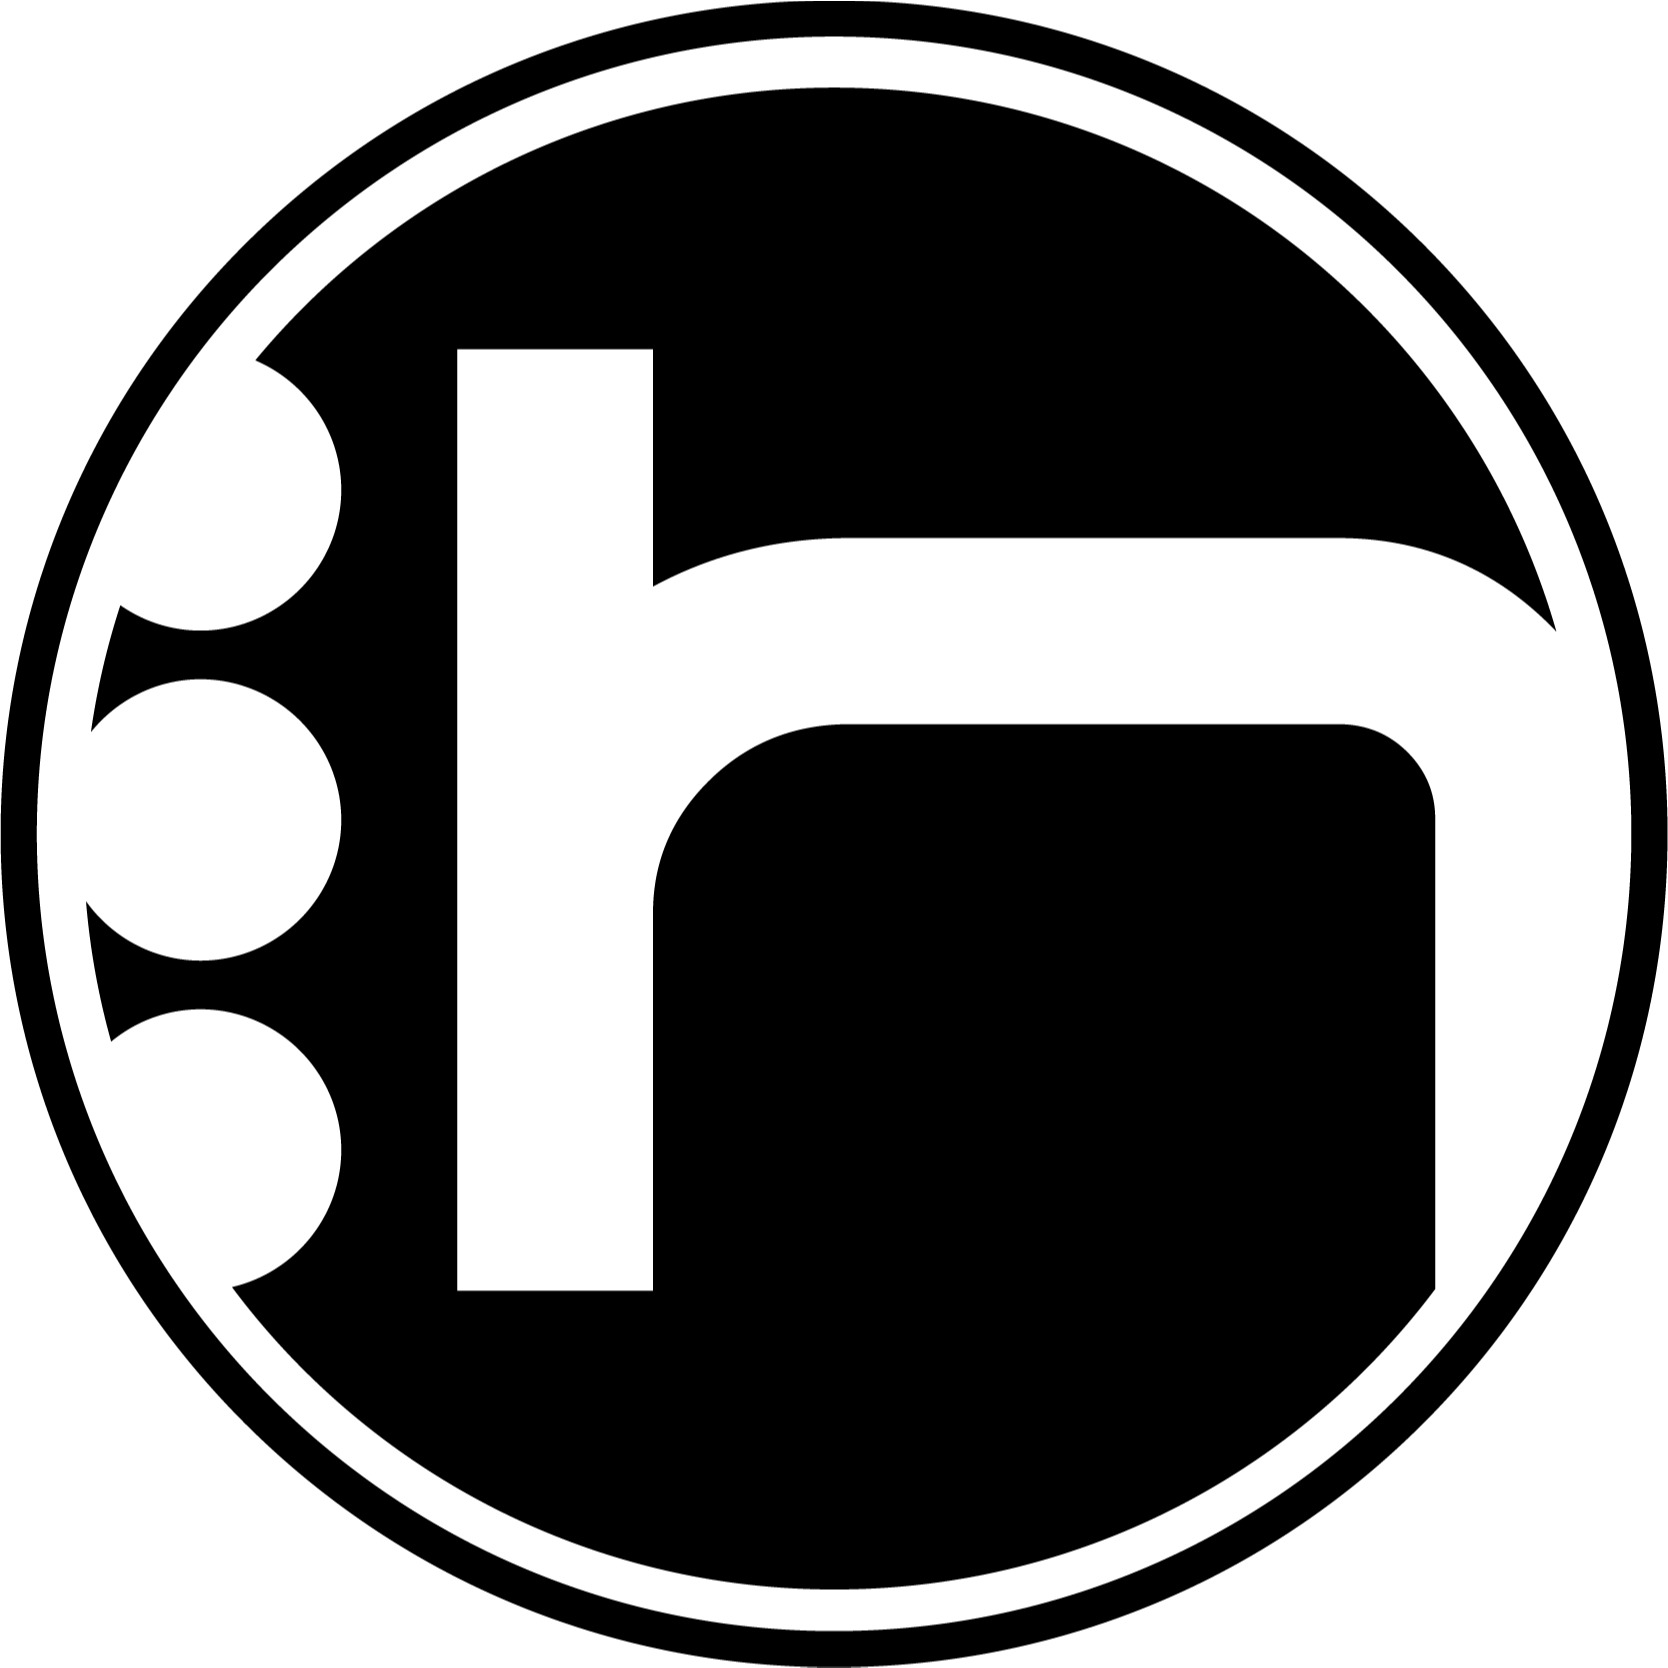 HARTISTE TEAMWEAR in Cottbus - Logo